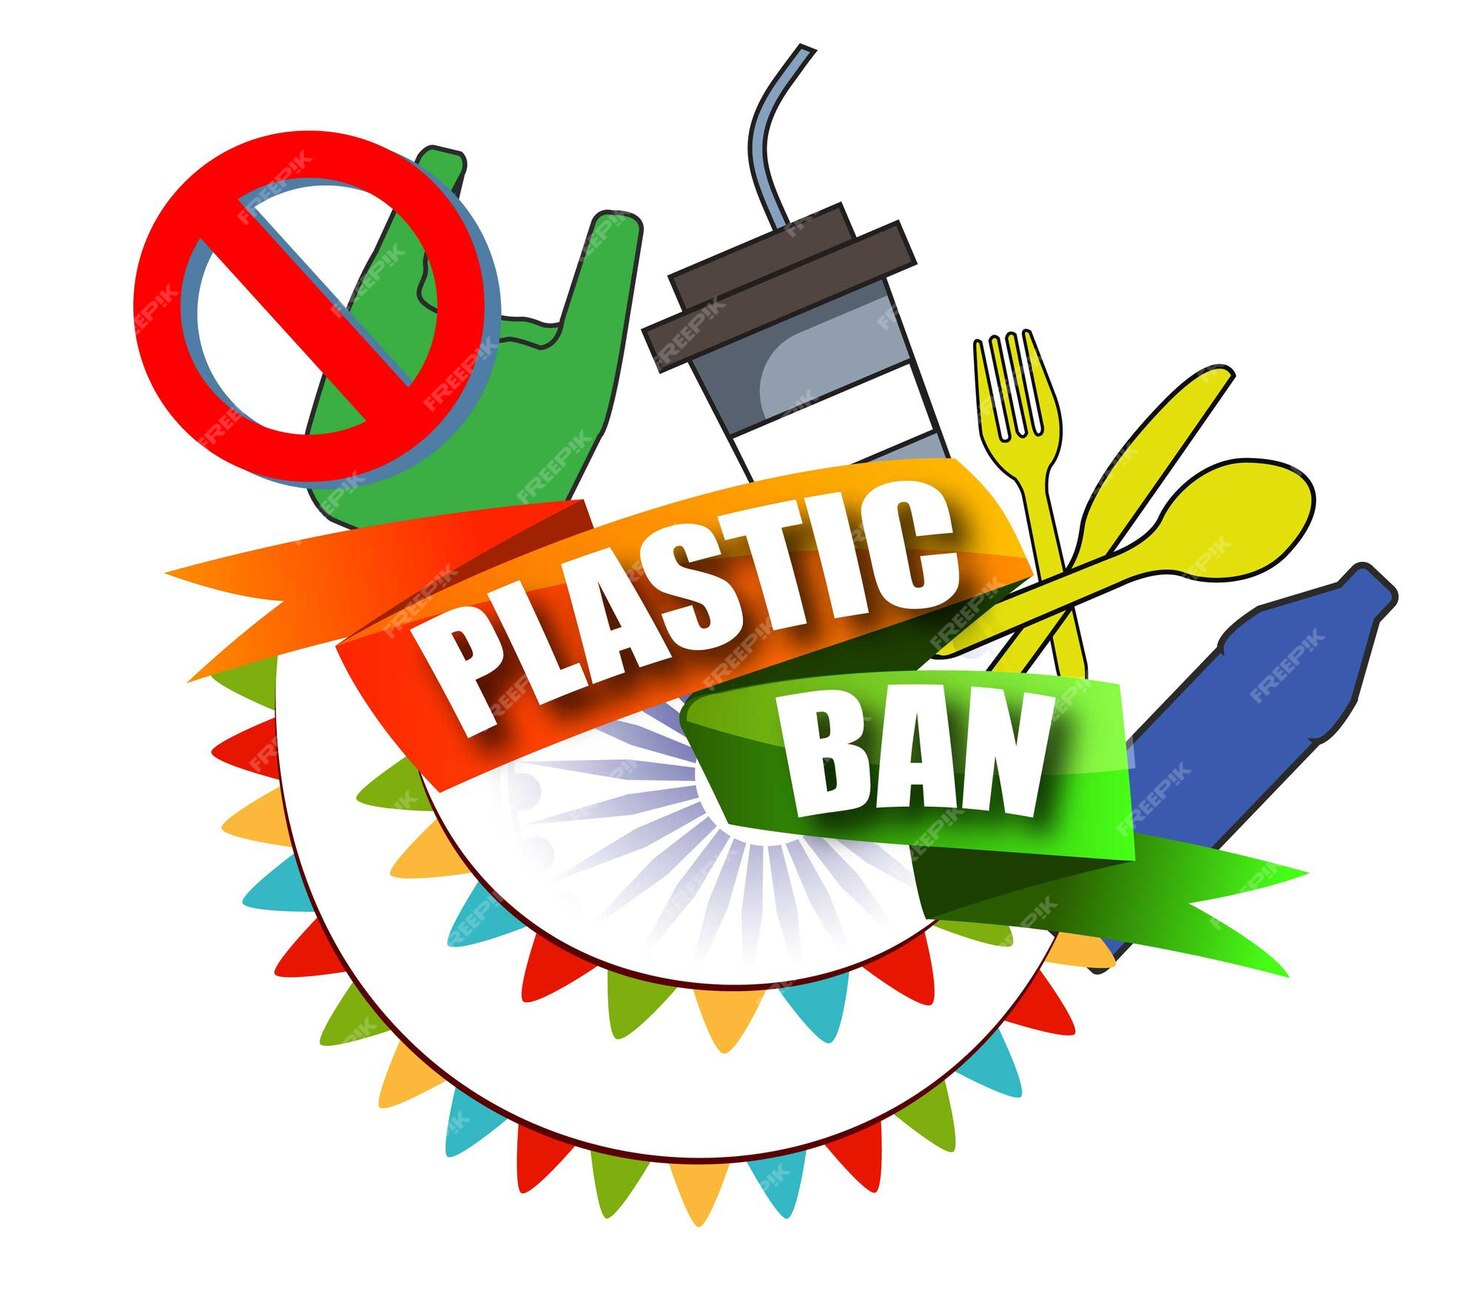 Premium Vector Single use plastic ban environmental concept say no to